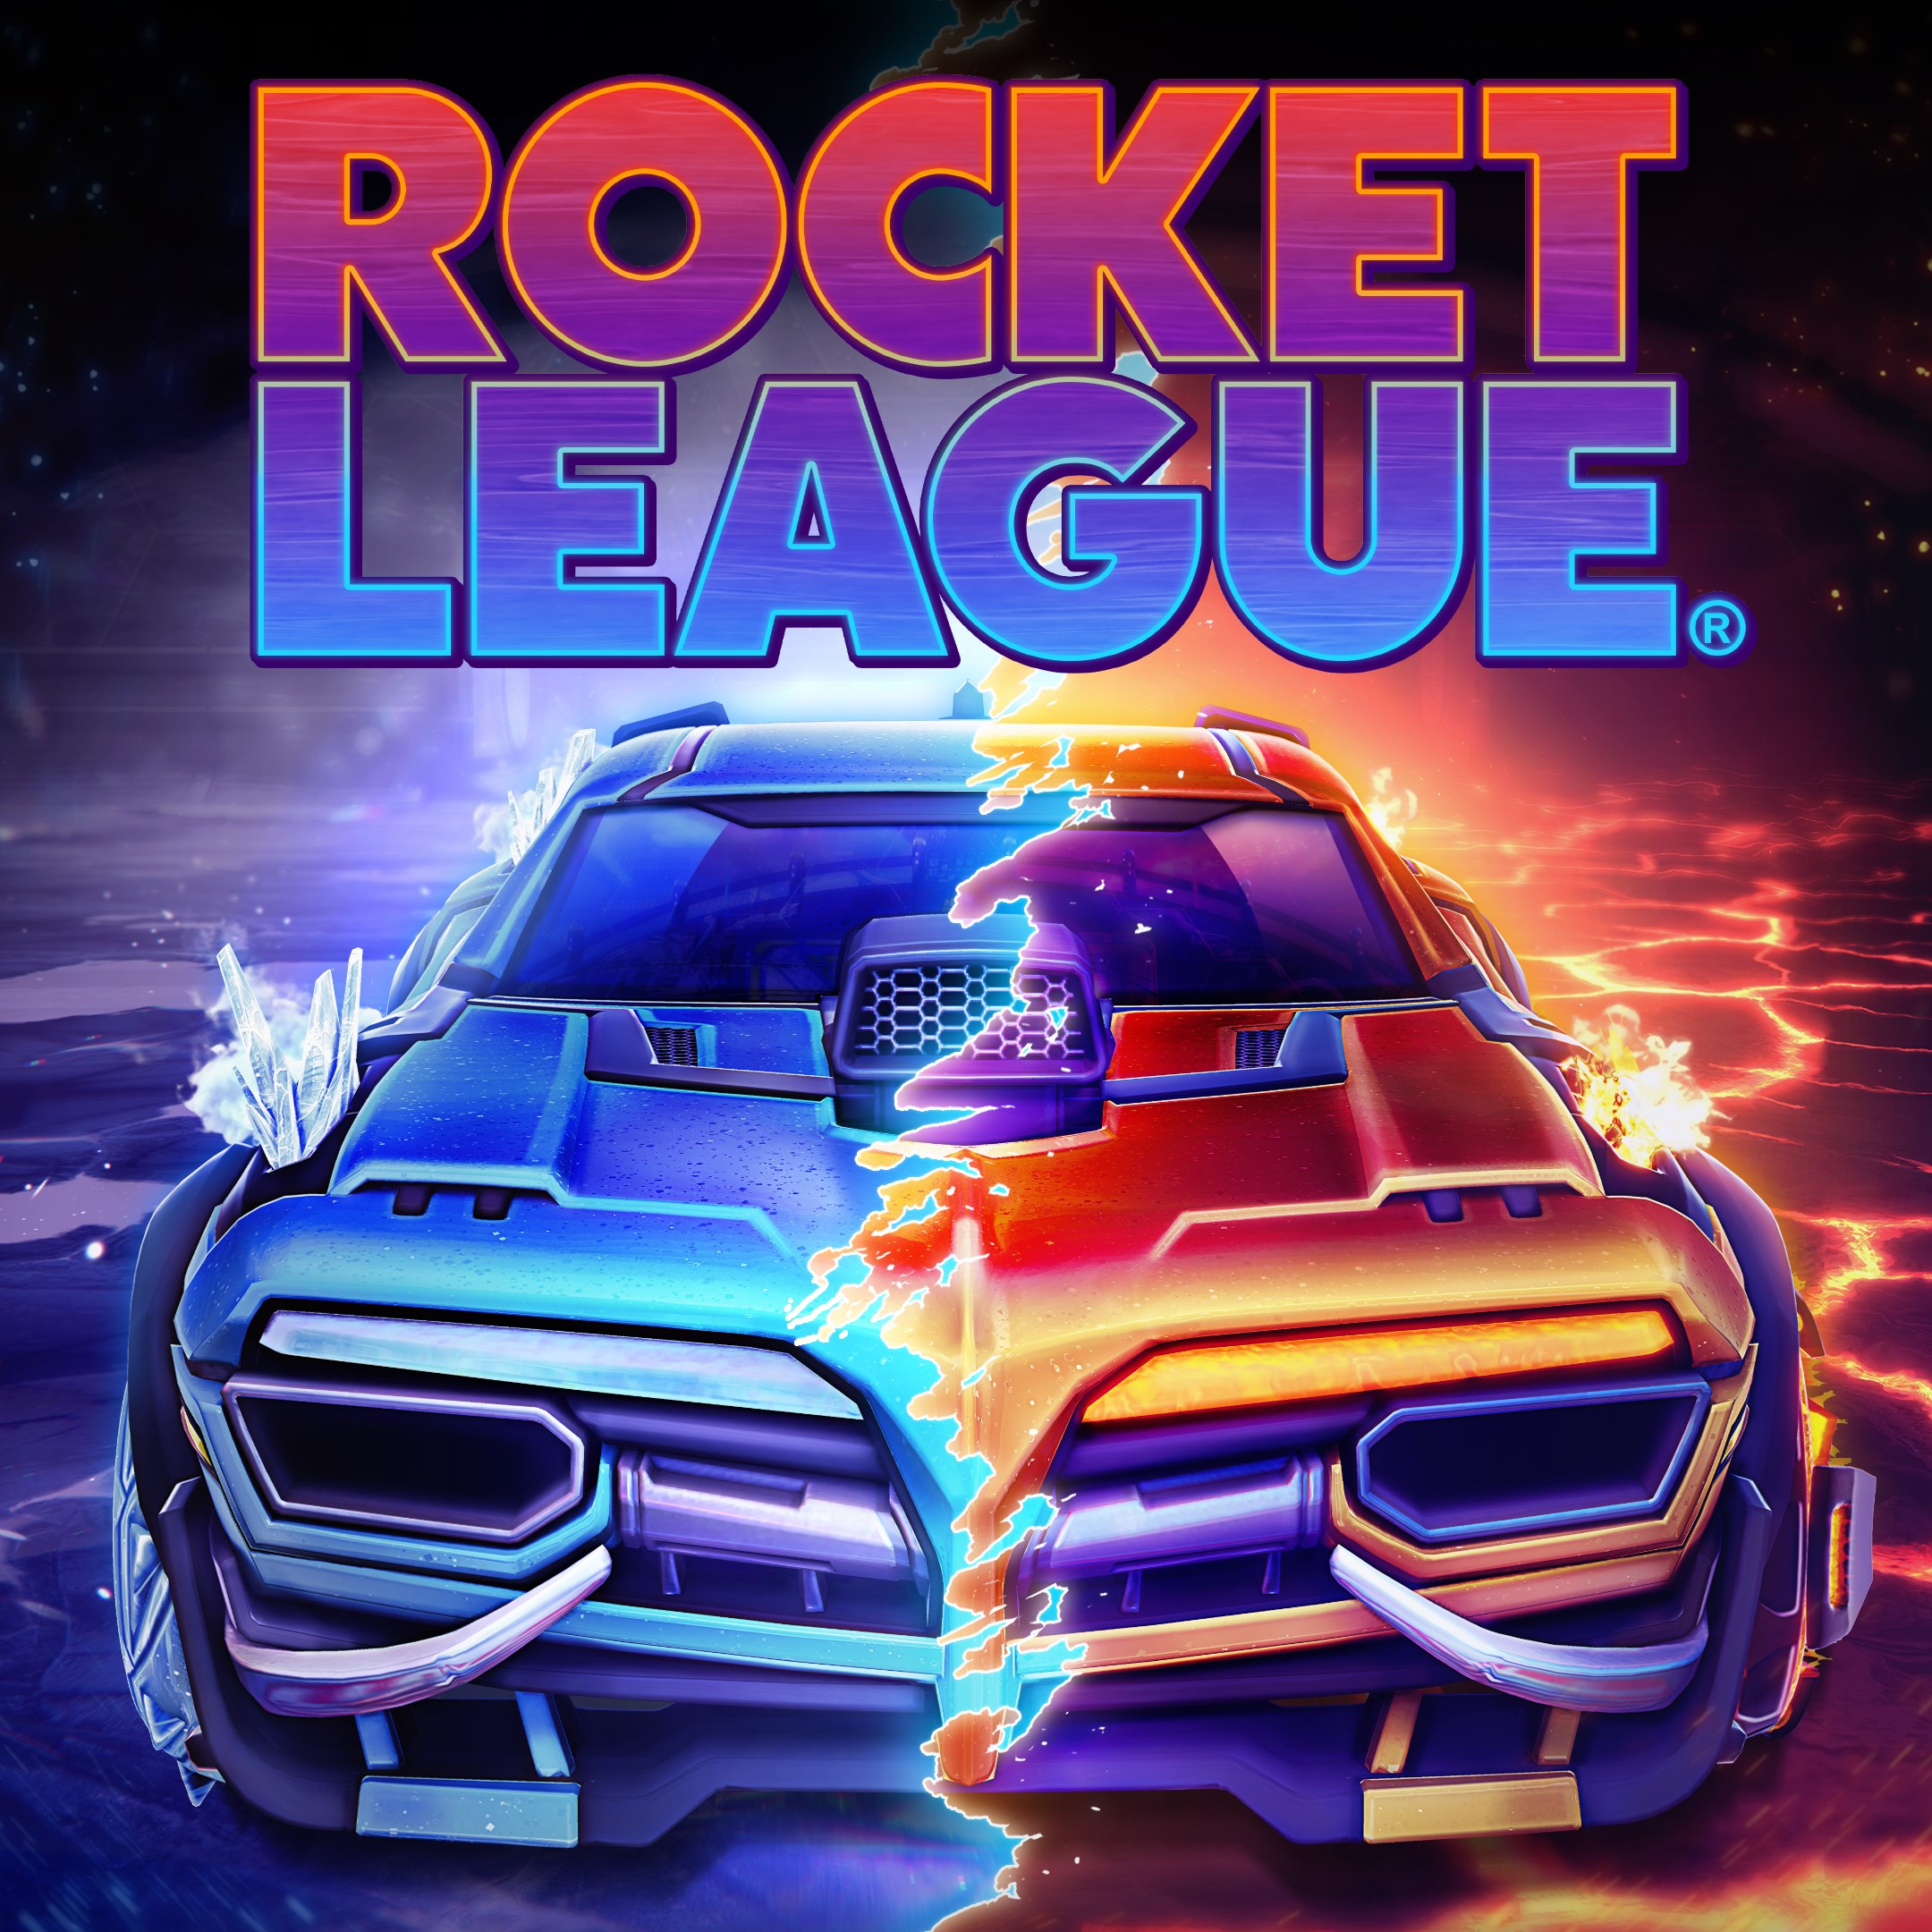 Rocket League®